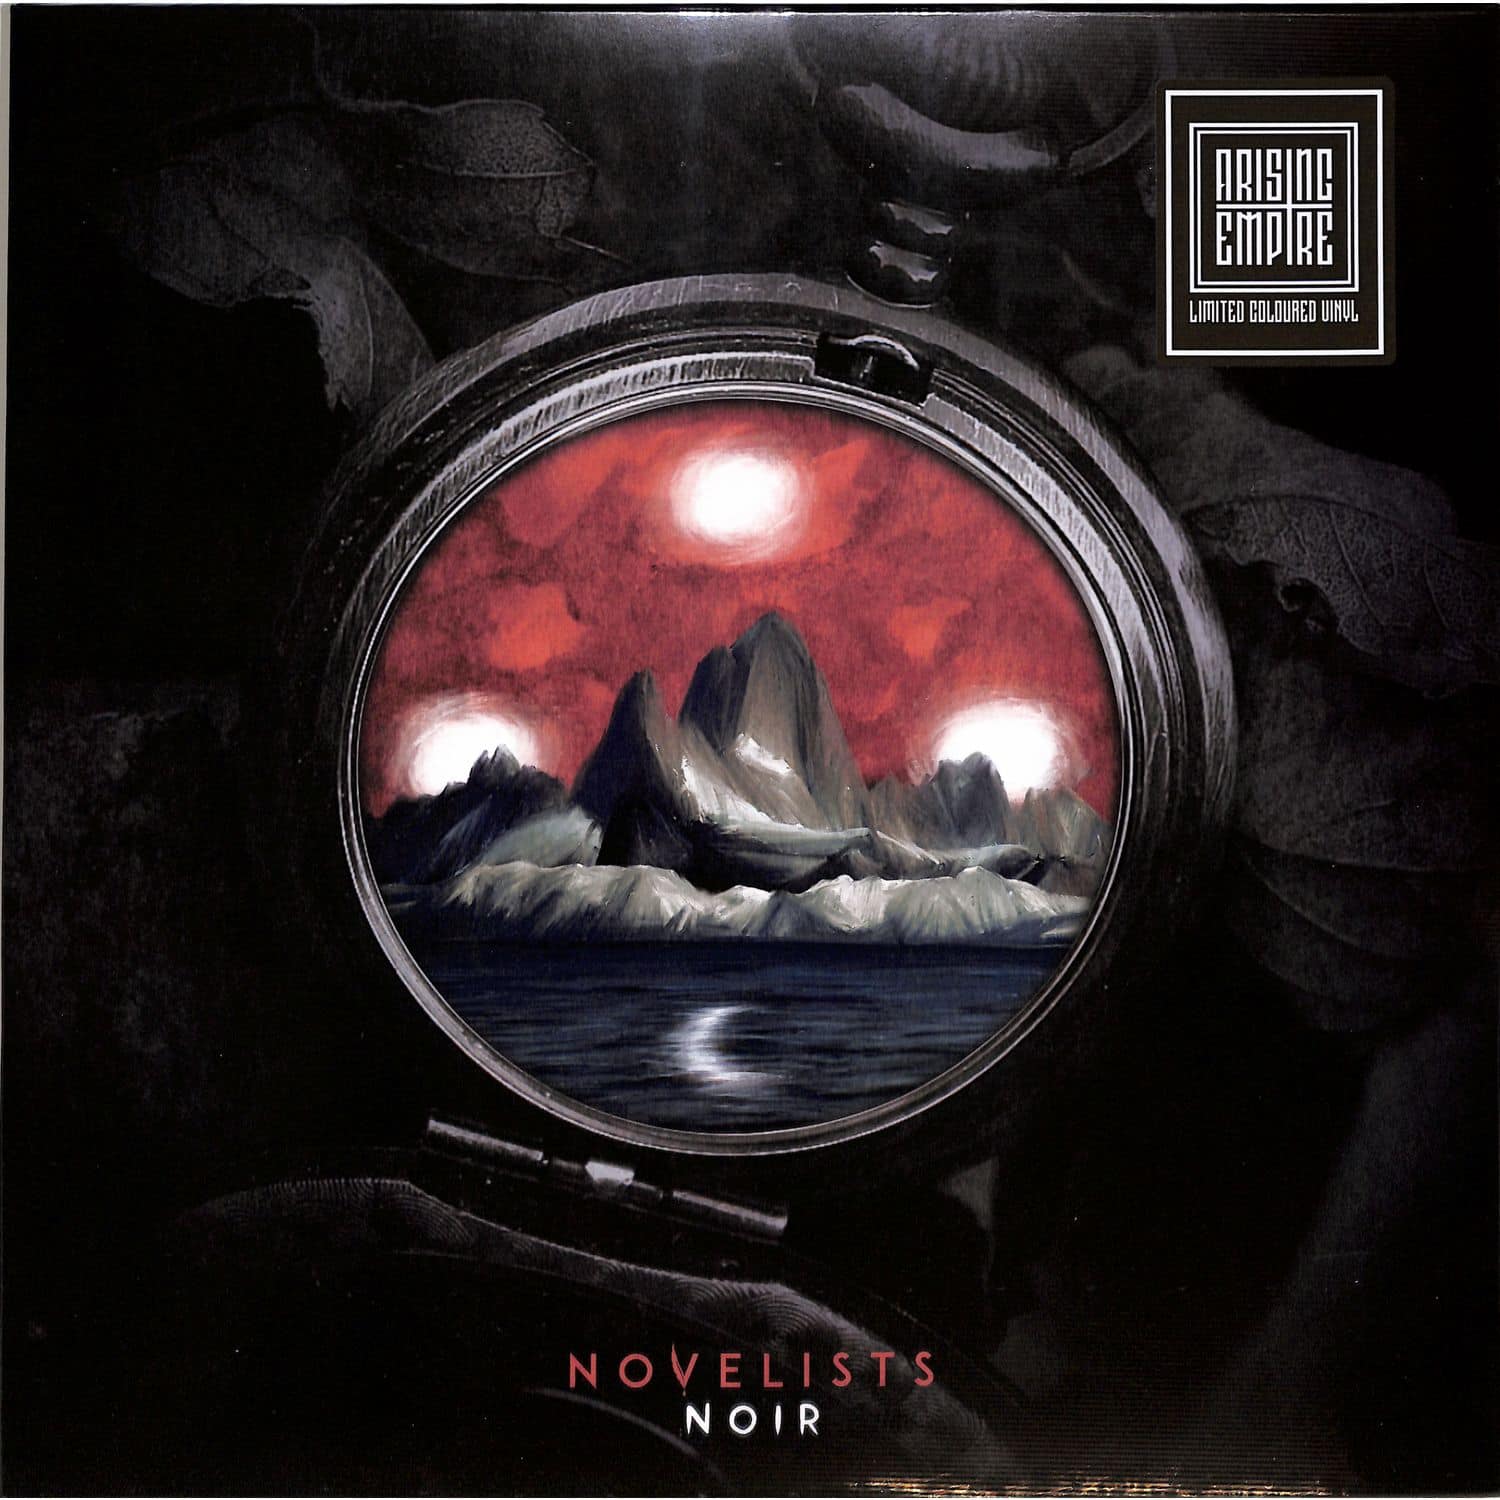 Novelists - NOIR 